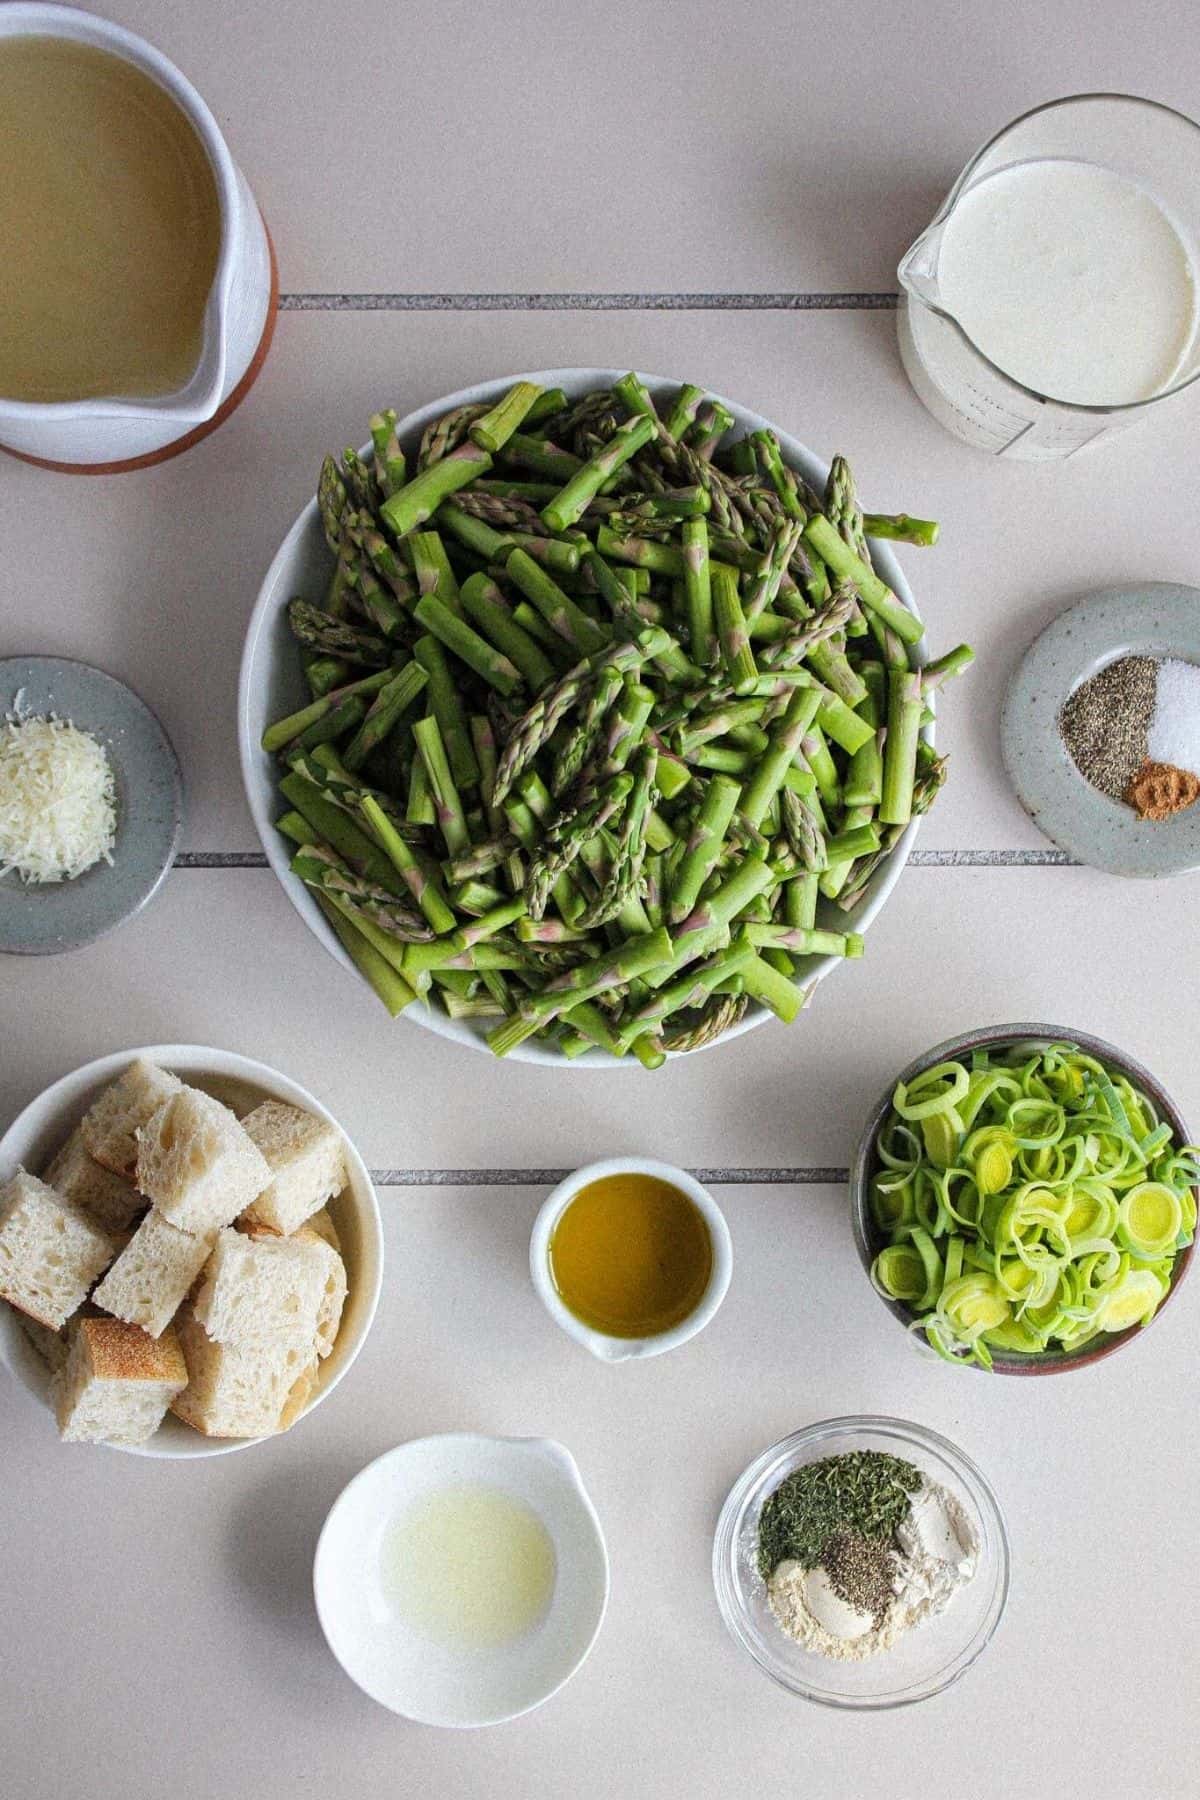 Ingredients for asparagus leek soup (see recipe card).